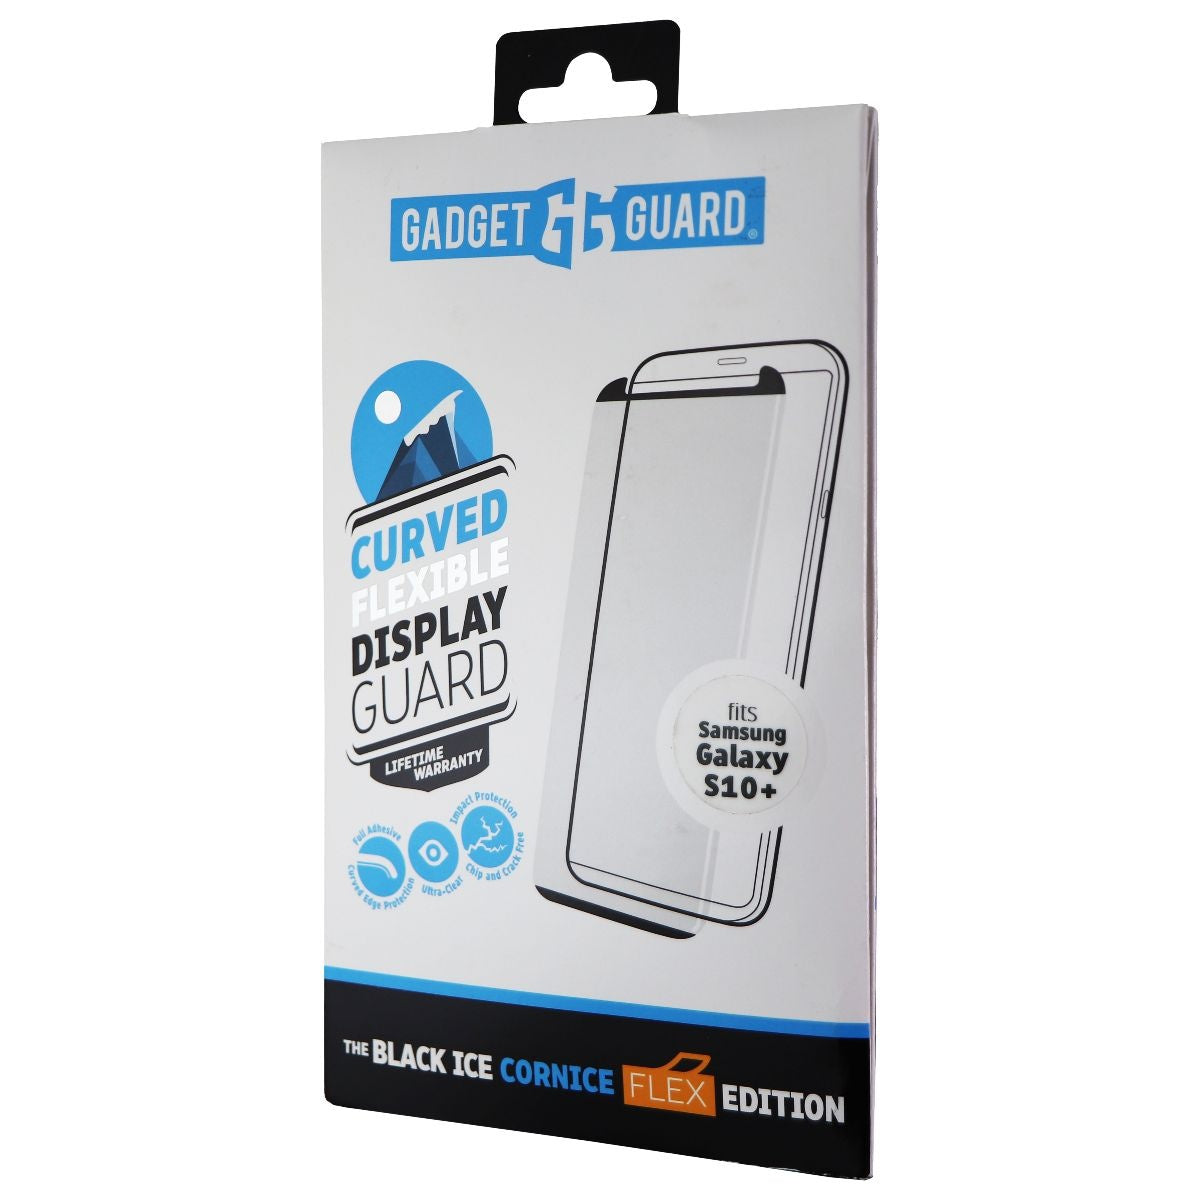 Gadget Guard Black Ice Cornice Flex Edition Screen Protector for Galaxy (S10+) Cell Phone - Screen Protectors Gadget Guard    - Simple Cell Bulk Wholesale Pricing - USA Seller